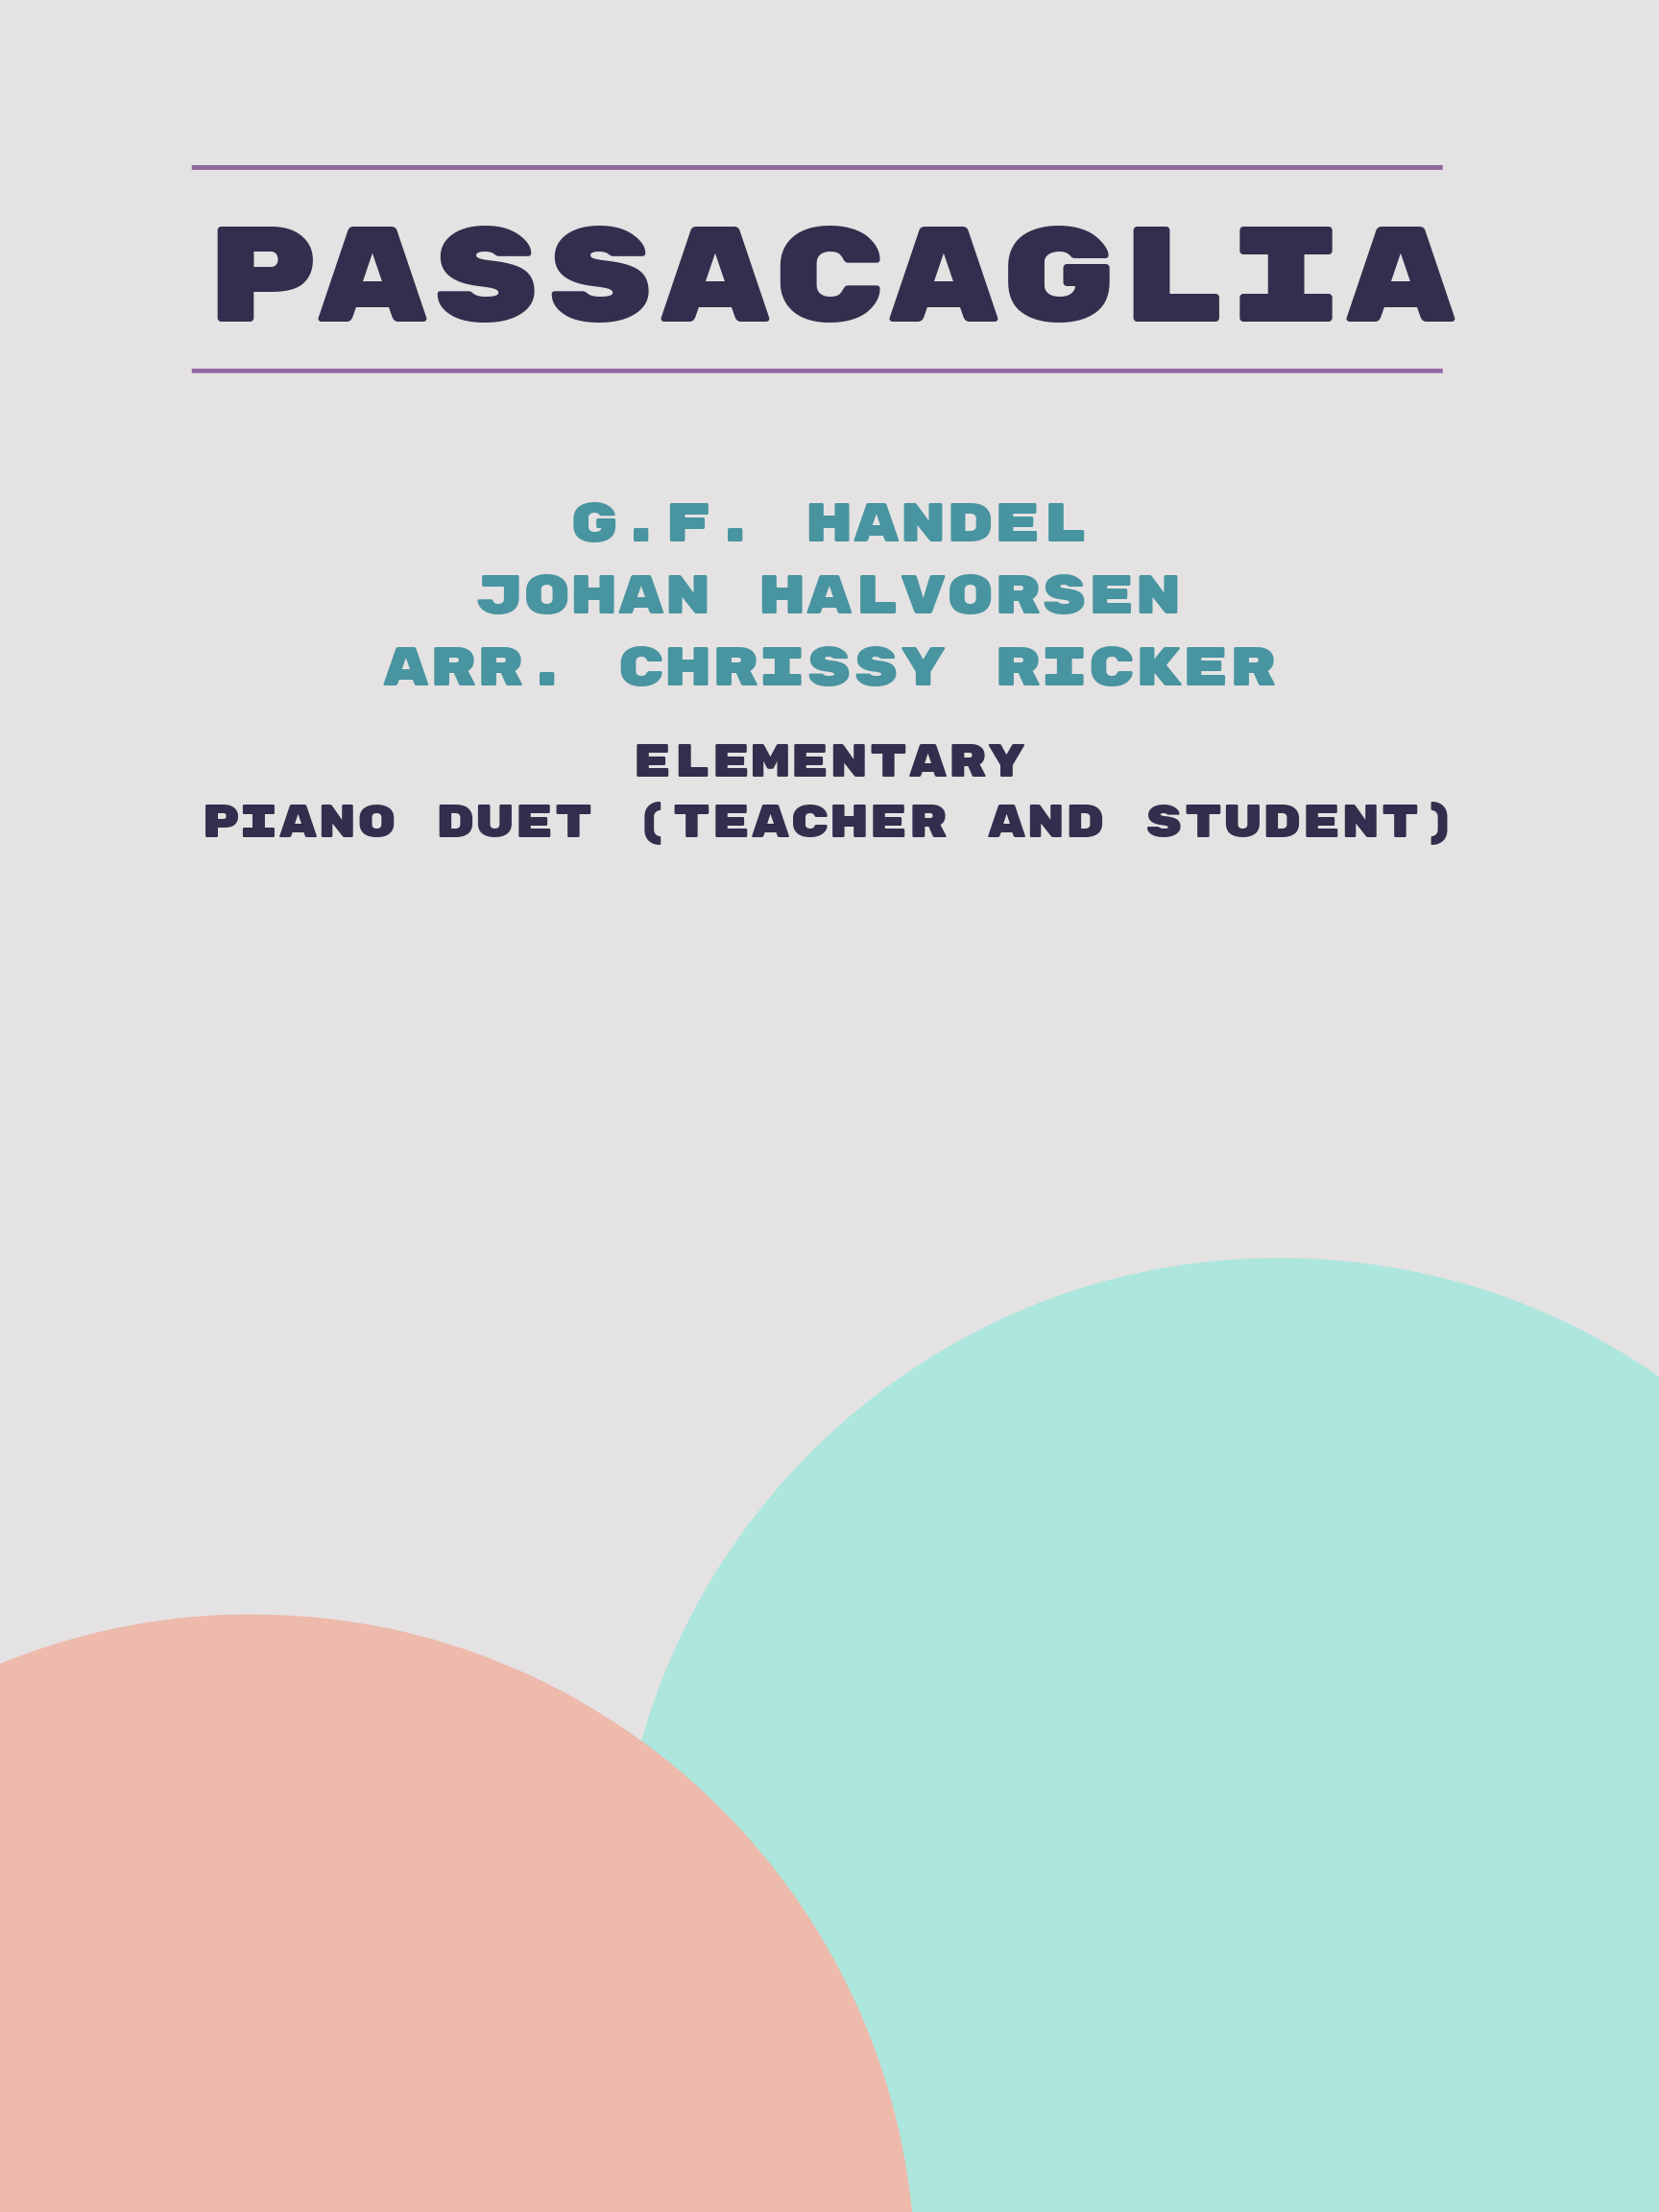 Passacaglia by G.F. Handel, Johan Halvorsen